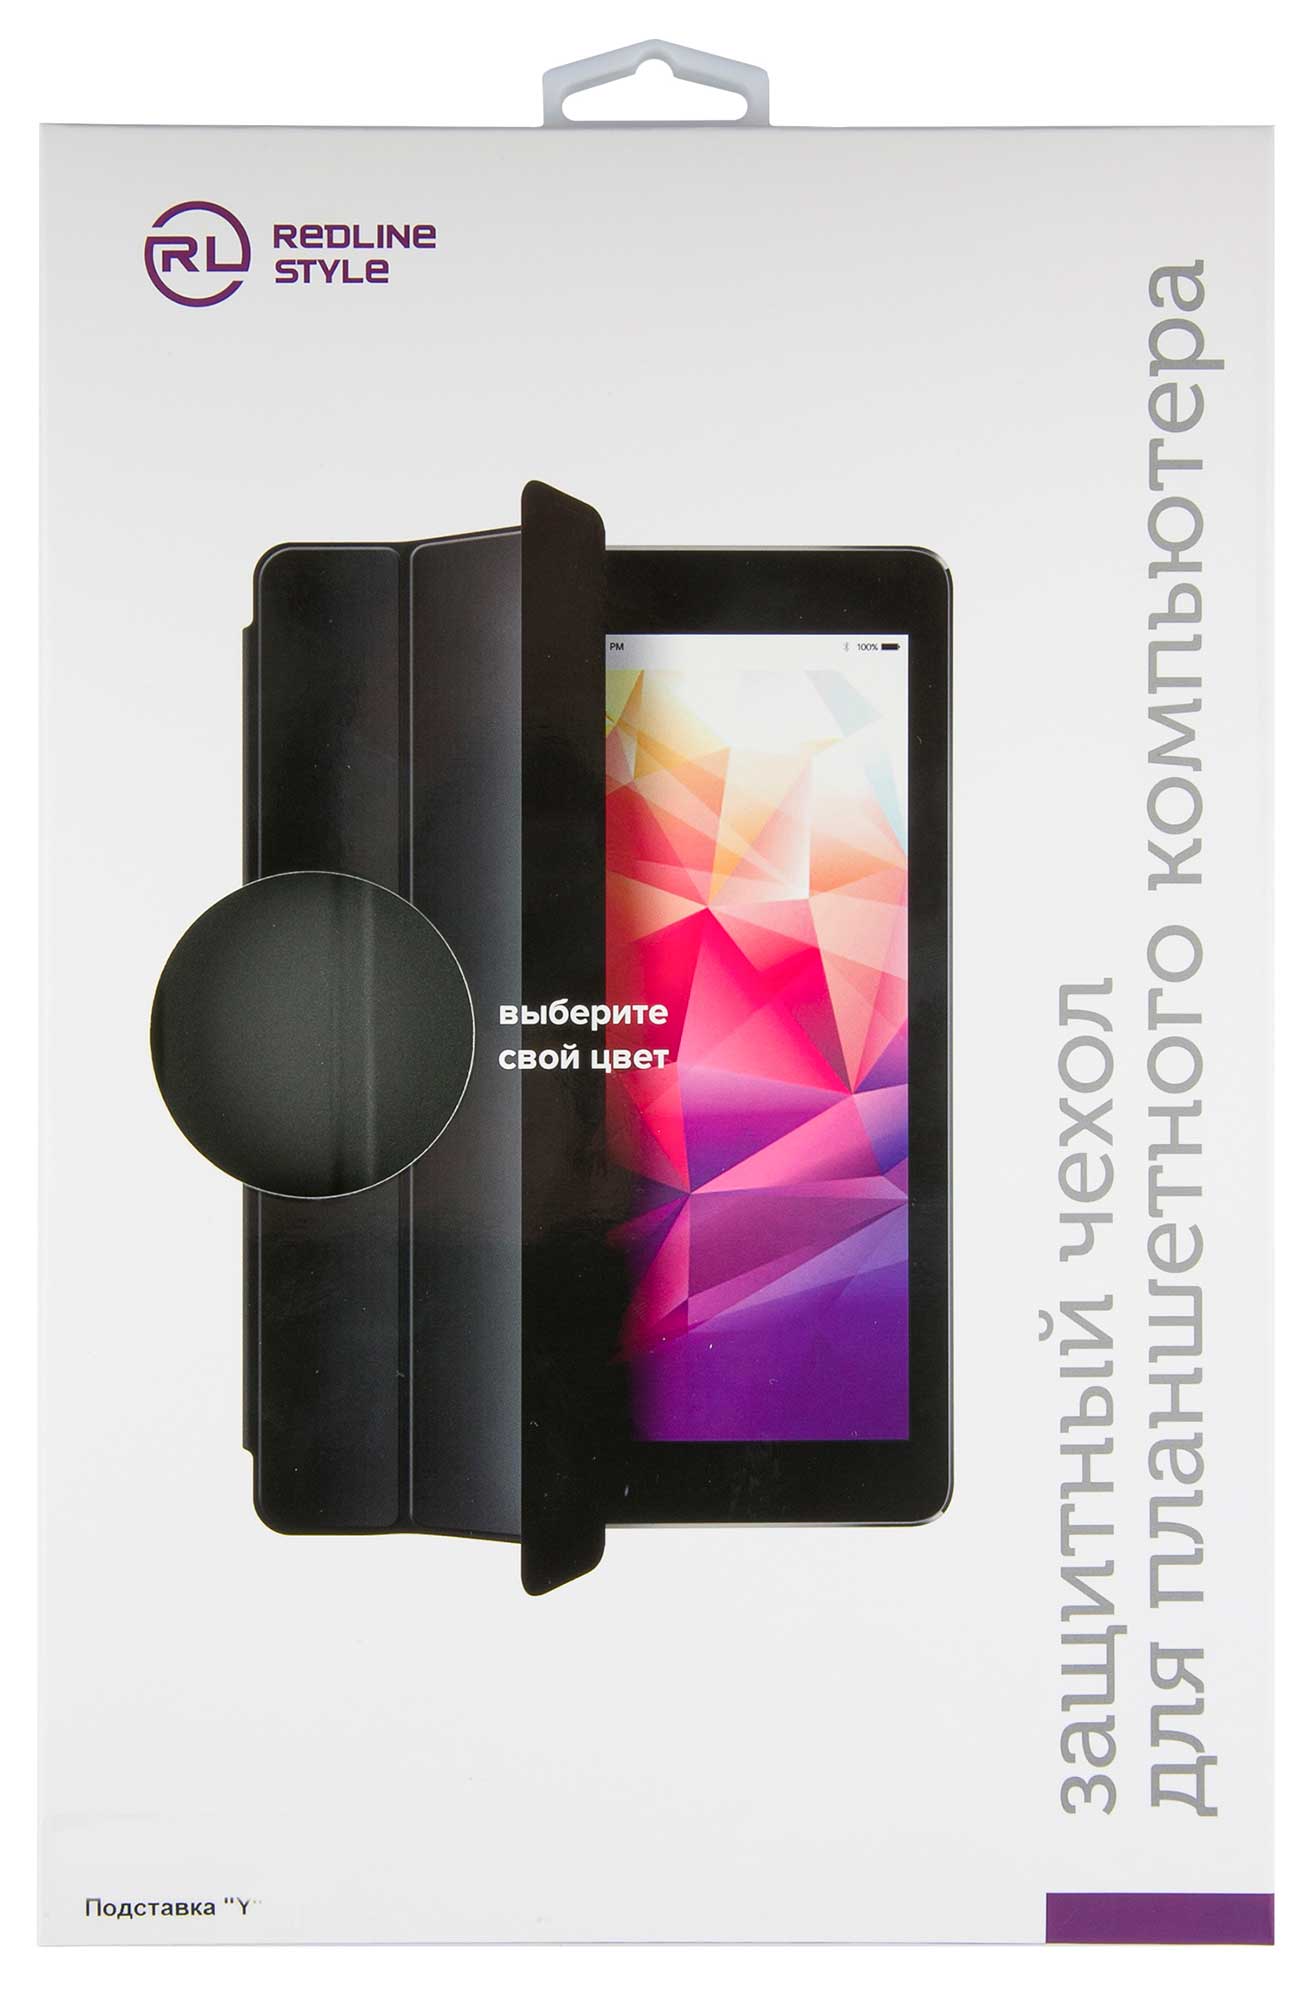 Чехол книжка iBox Premium для Samsung Galaxy Tab A 7.0 (2016) подставка Y черный